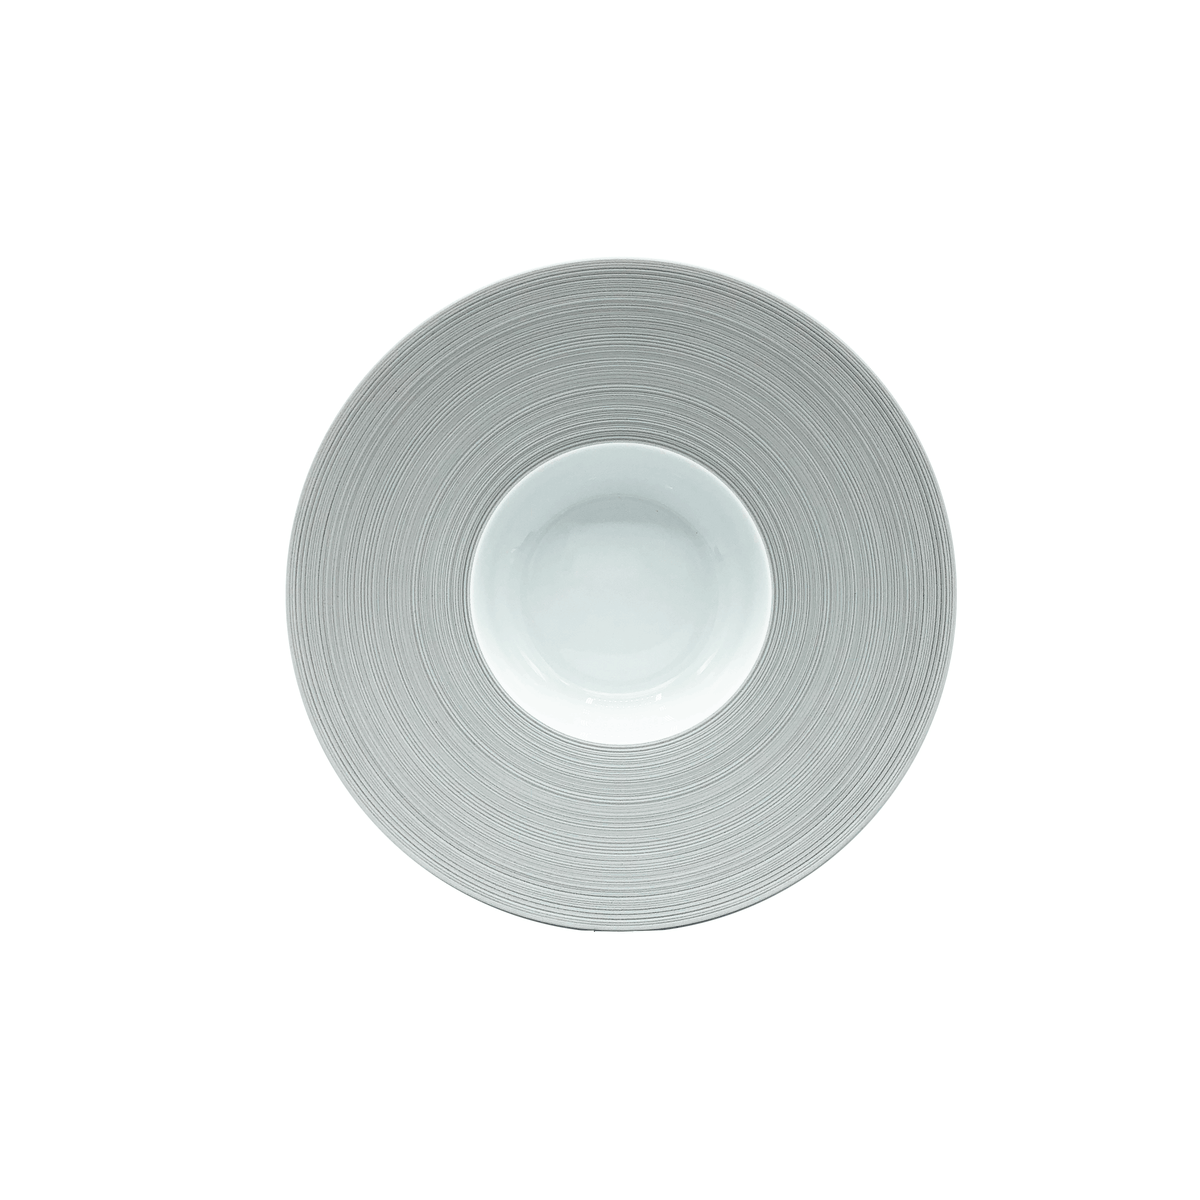 HEMISPHERE Grey - Rim soup plate, large